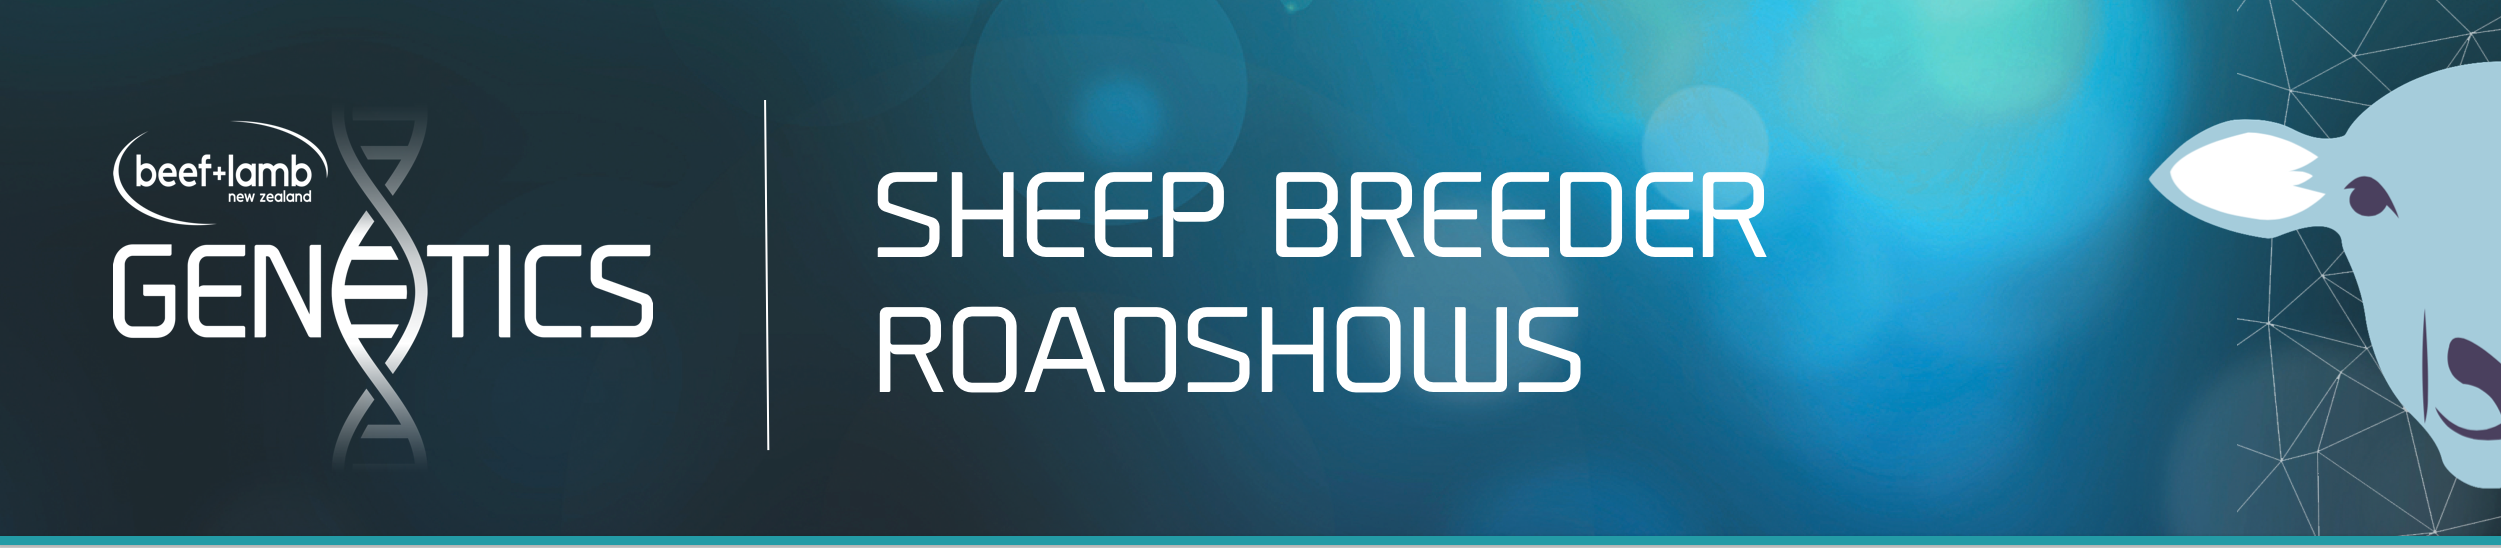 Sheep Breeder Roadshows